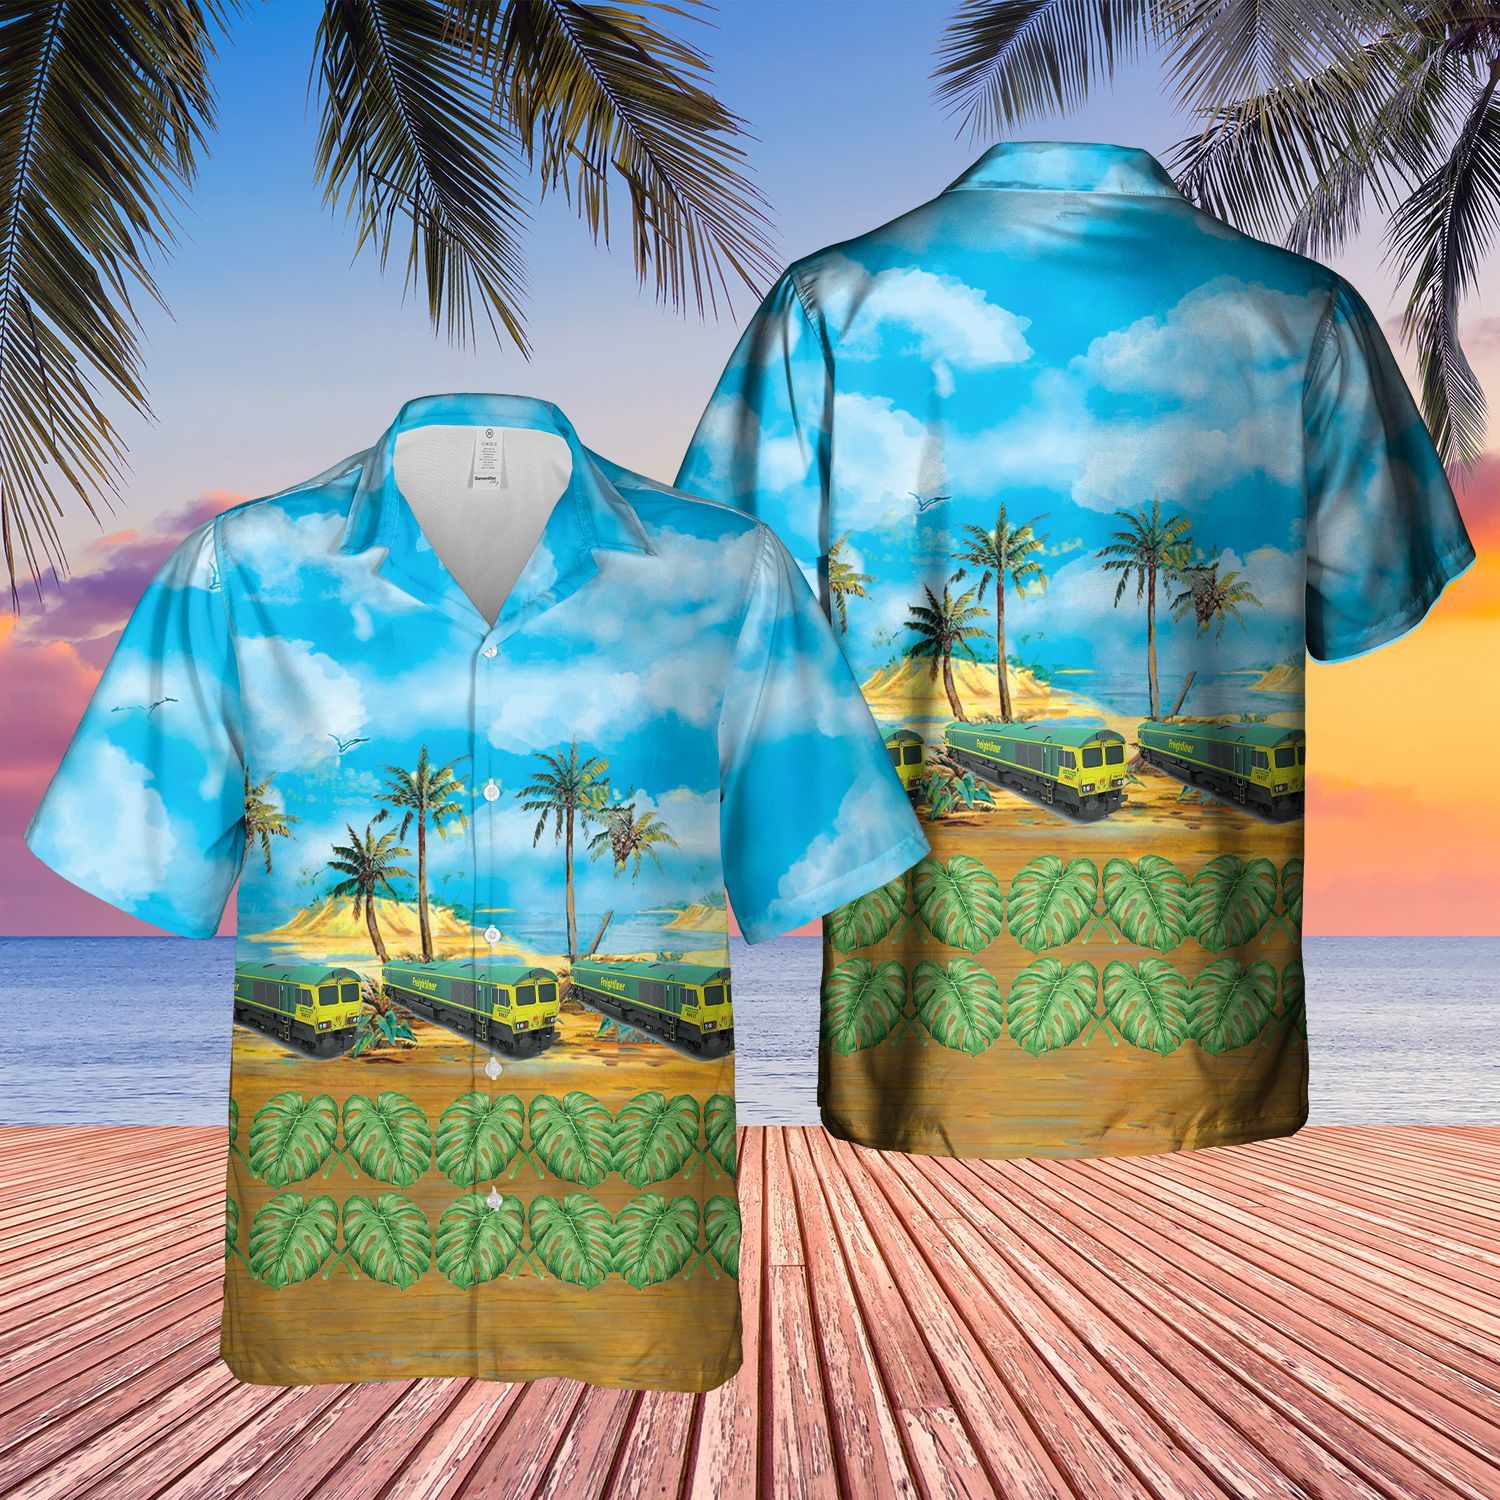 Enjoy your summer with top cool hawaiian shirt below 135